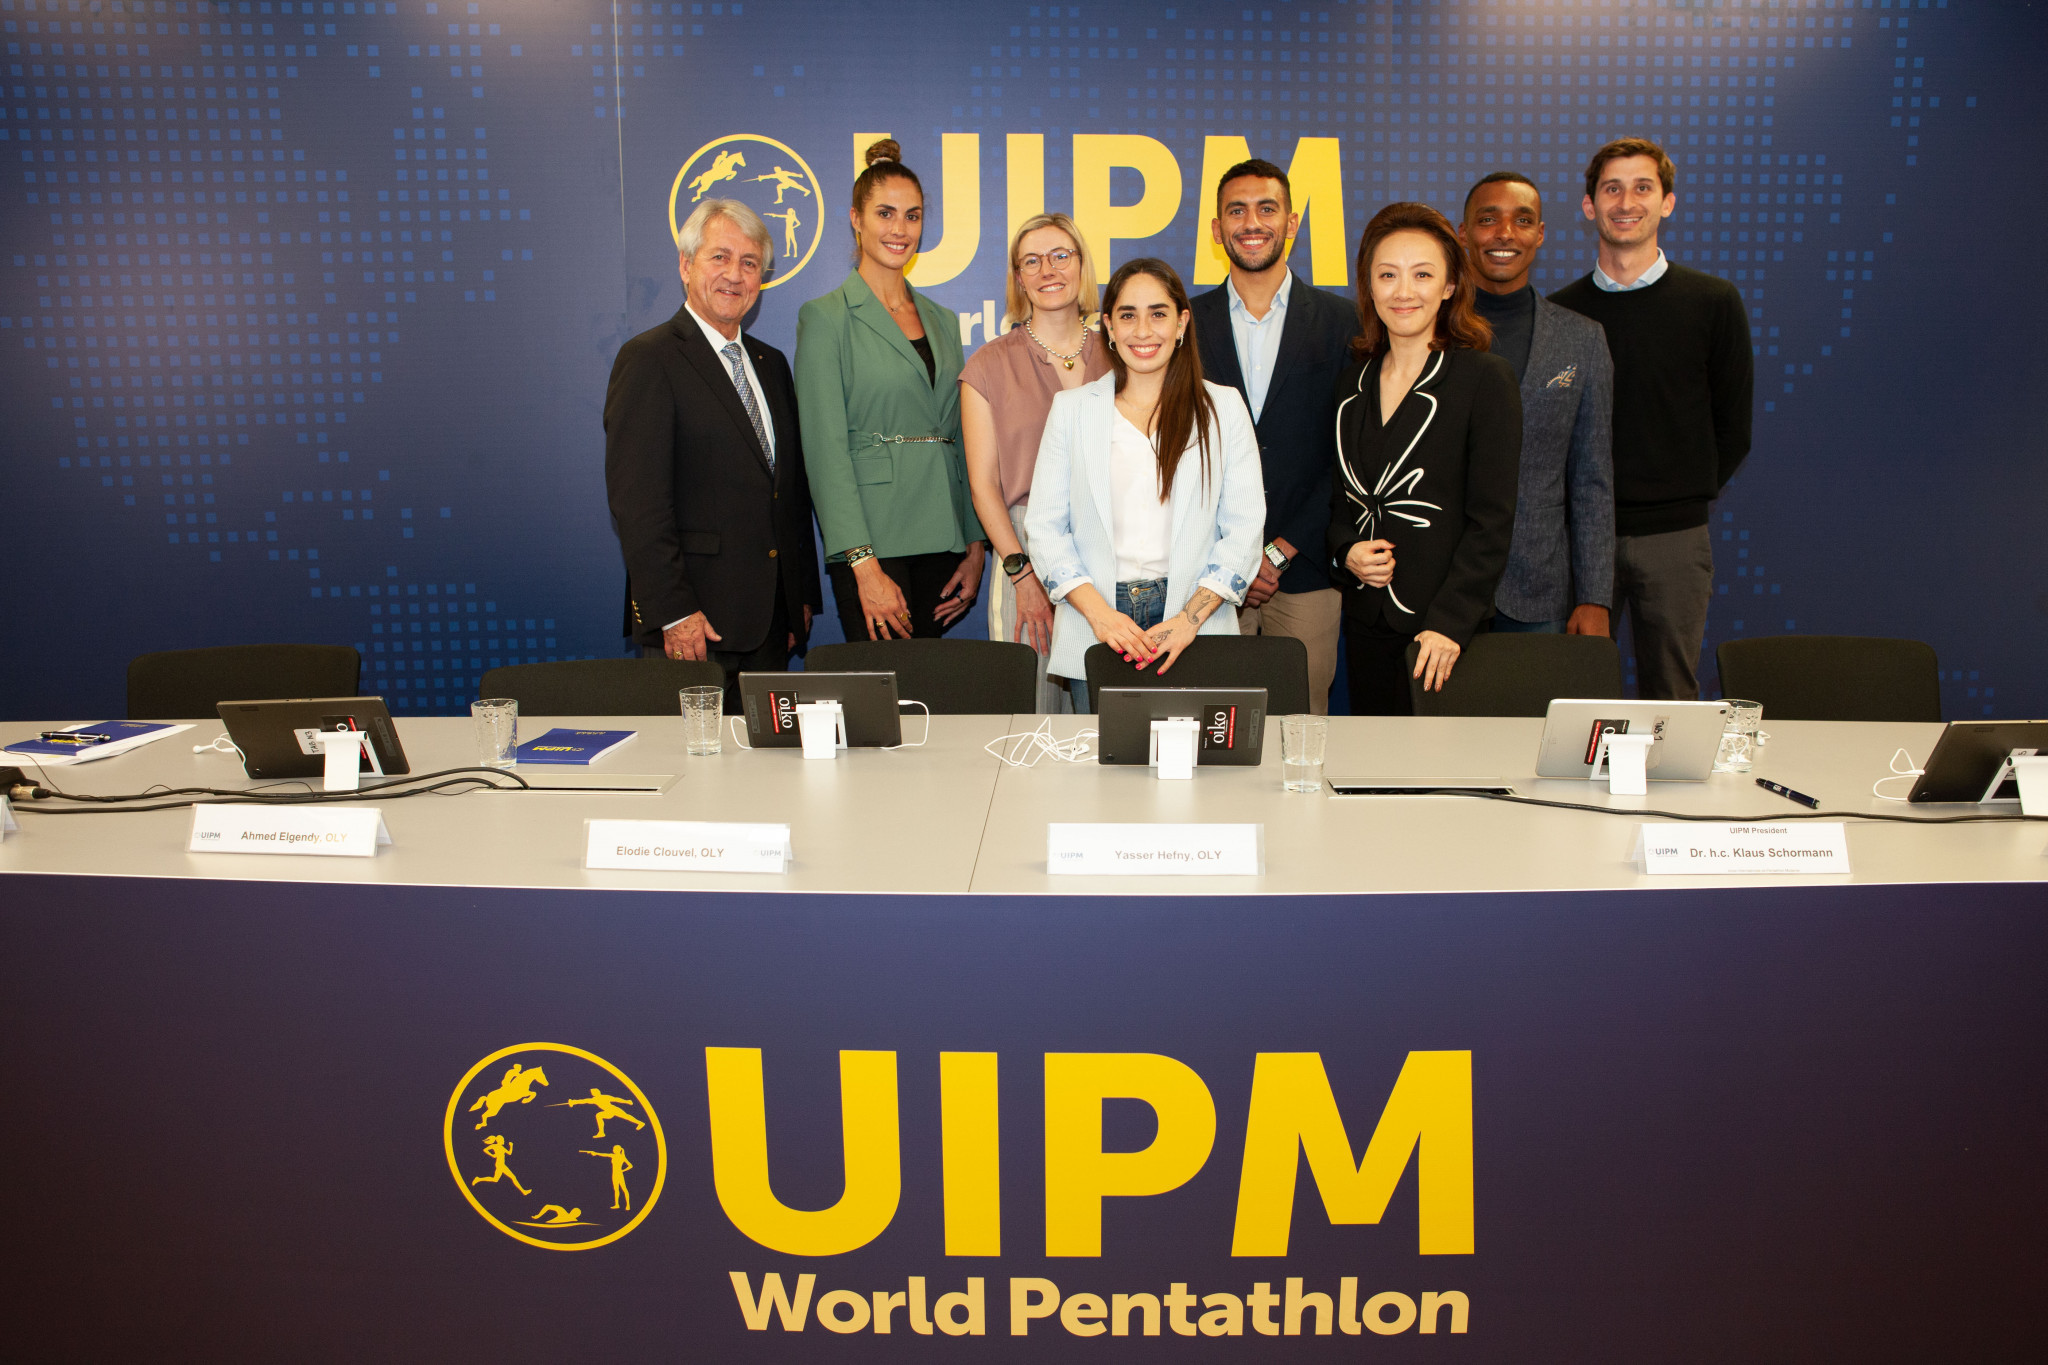 Modern pentathlon obstacle test events a roaring success claim UIPM